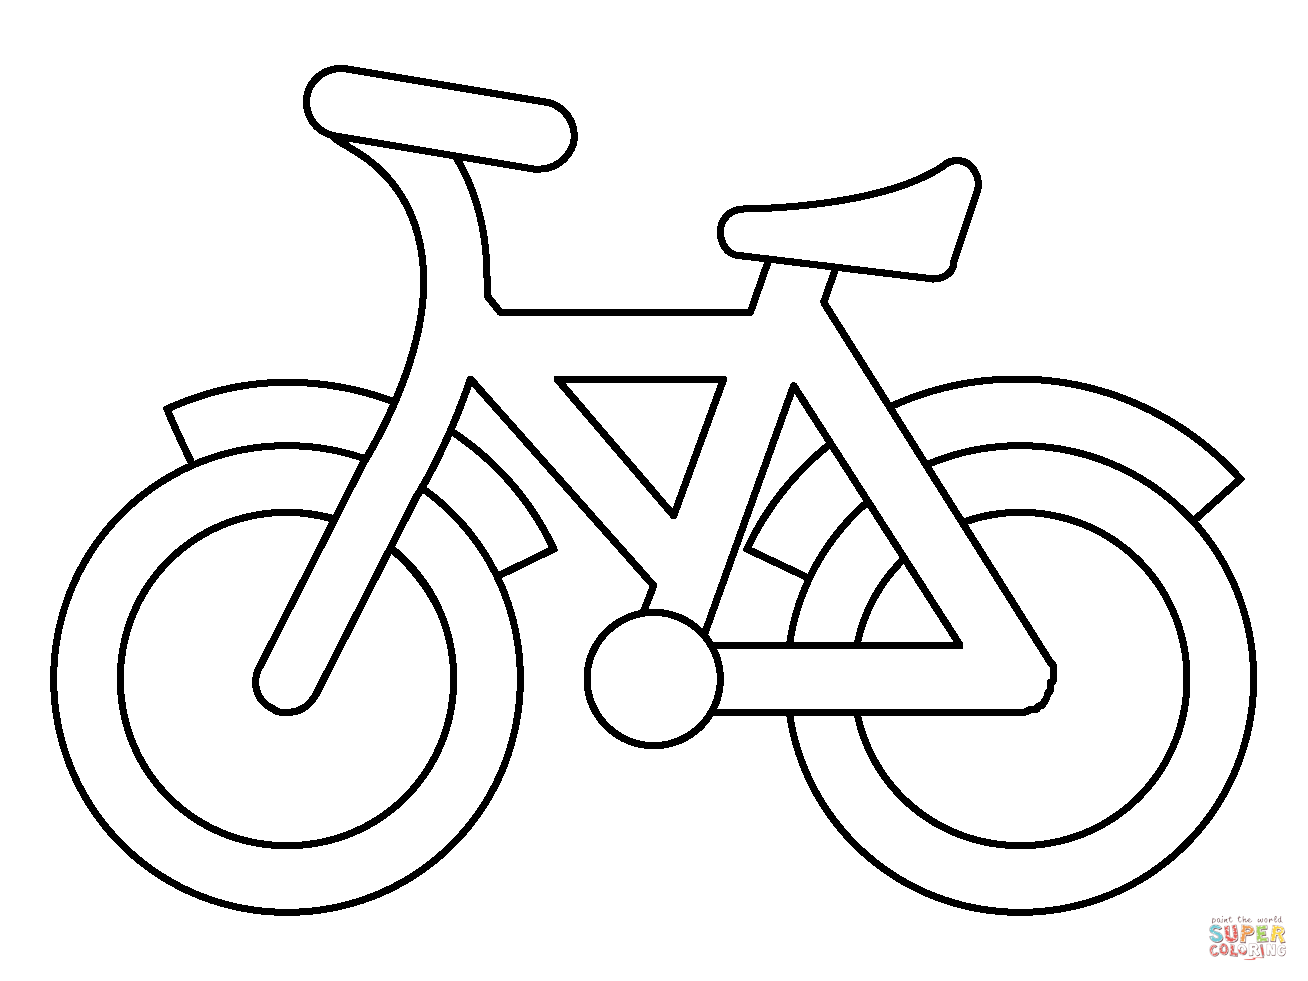 Bicycle emoji coloring page free printable coloring pages